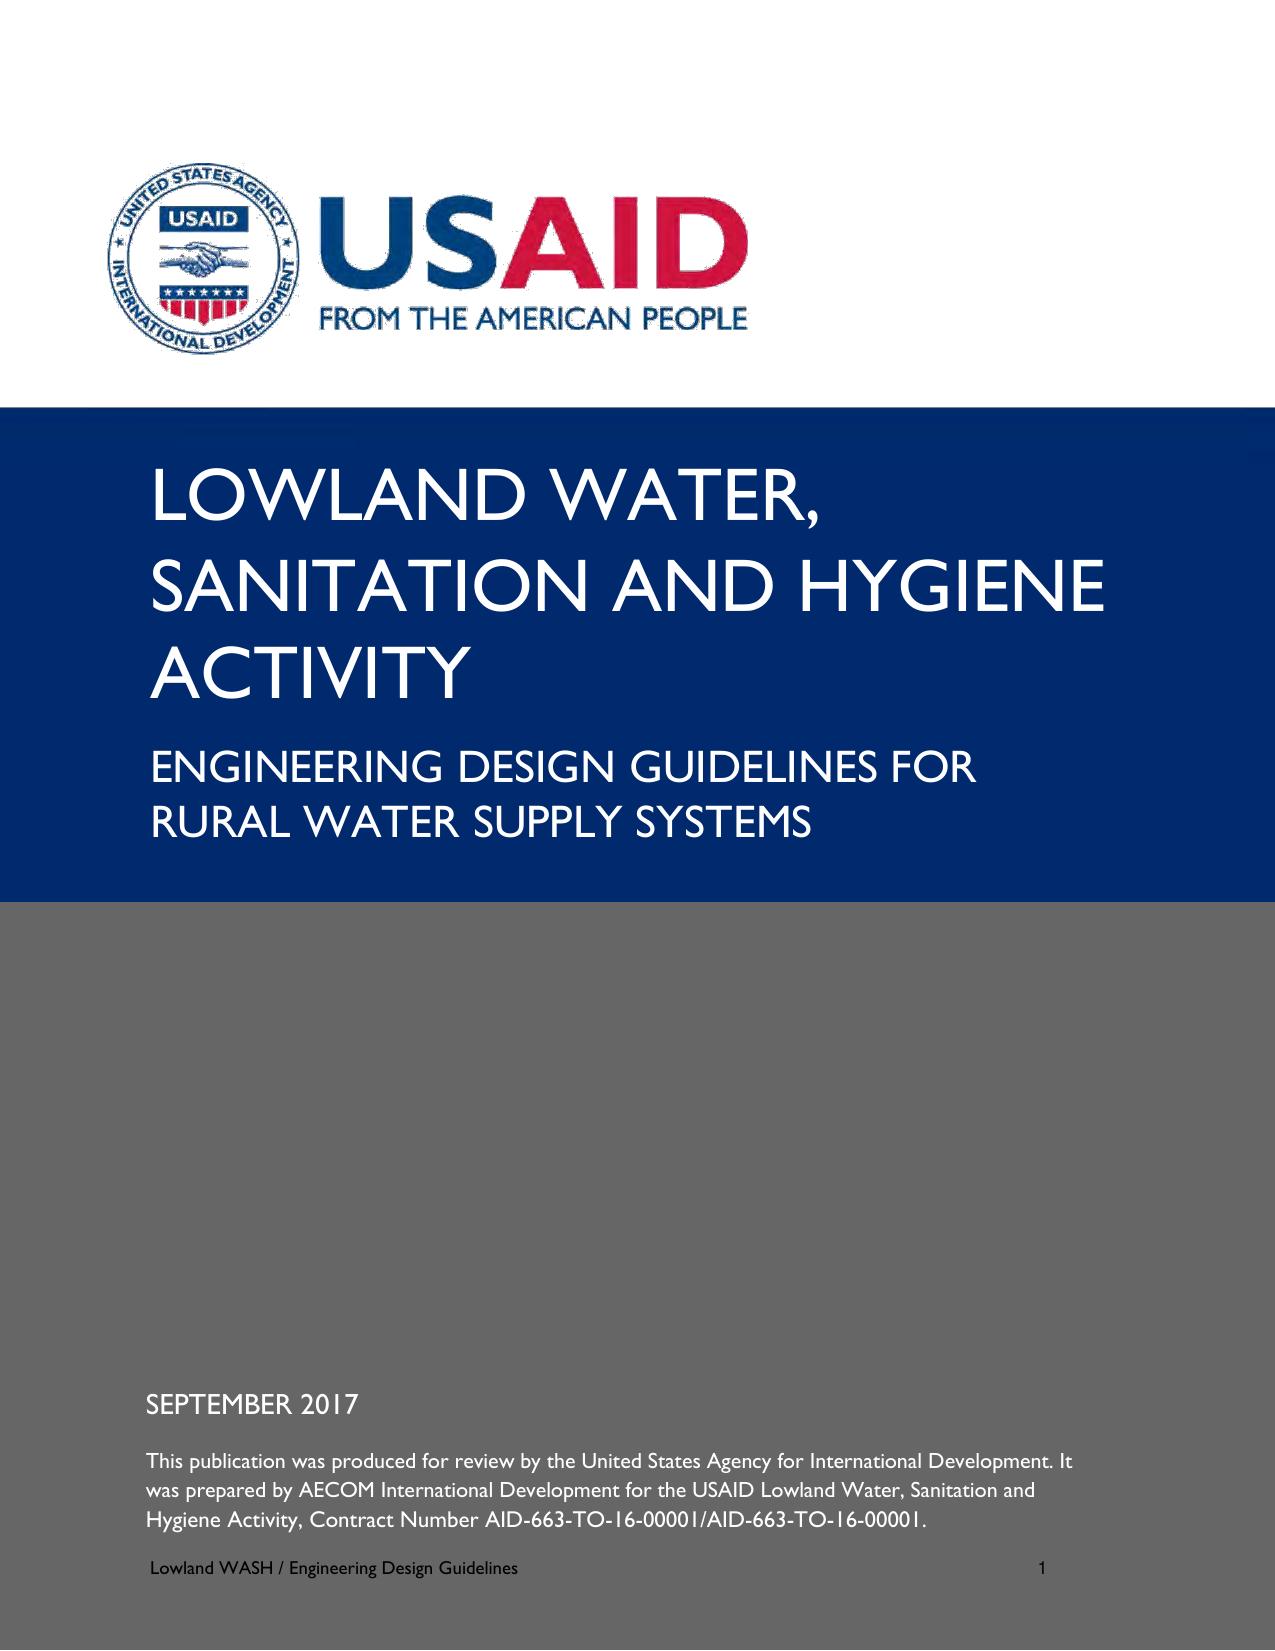 Lowland WASH Eng Design Guidelines Final Oct. 2018